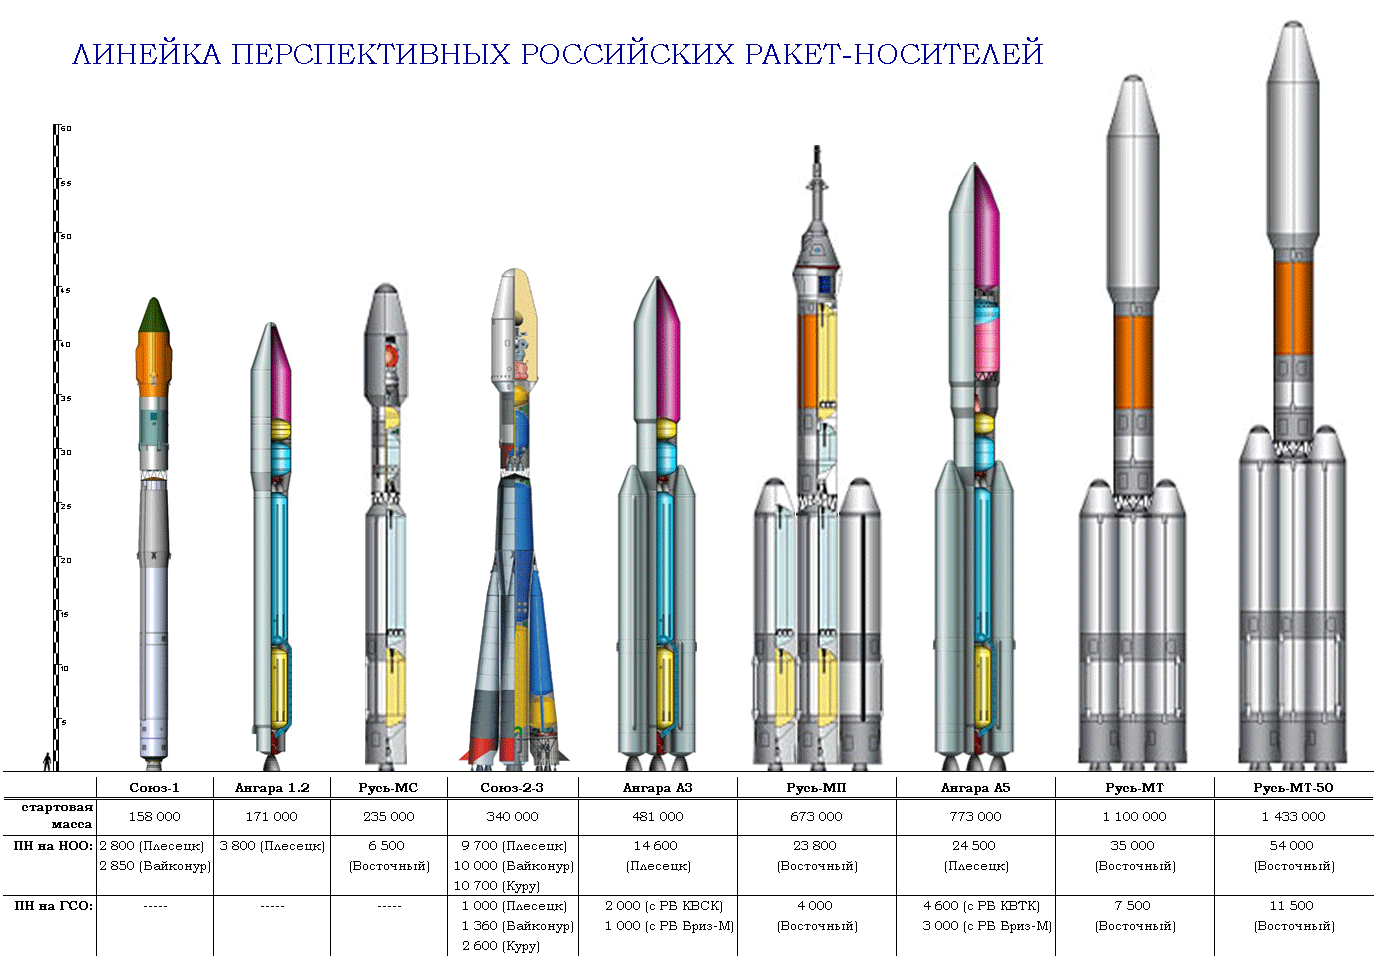 Ангара 5 ракета носитель характеристики. Ангара а5 схема ступеней. Ангара семейство ракет-носителей. Ангара 1.2 ракета-носитель. Ракета Ангара 1.2.